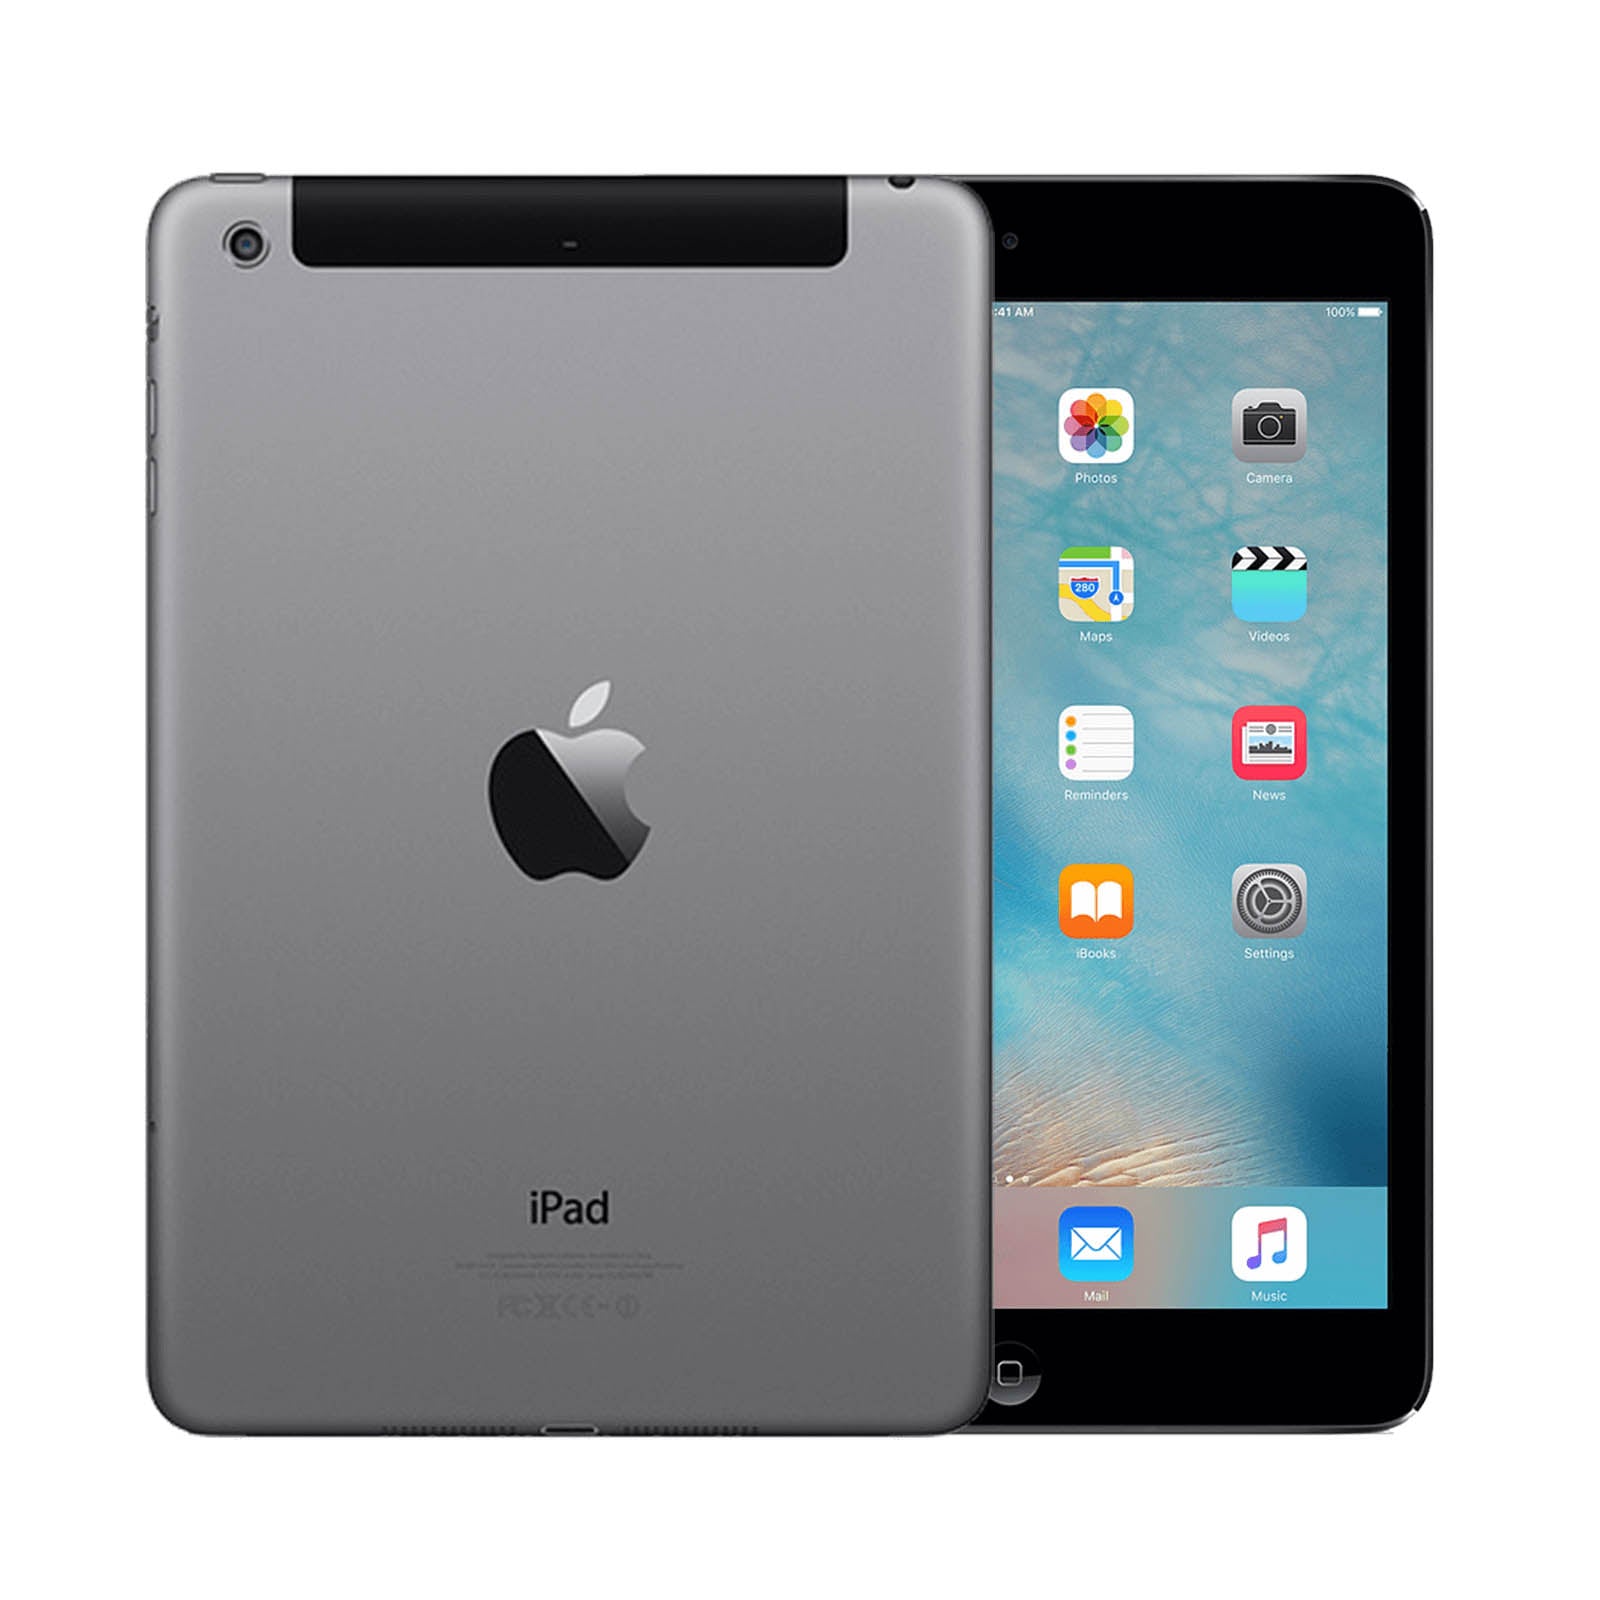 Apple iPad mini 3 16GB Space Grey Fair- Unlocked